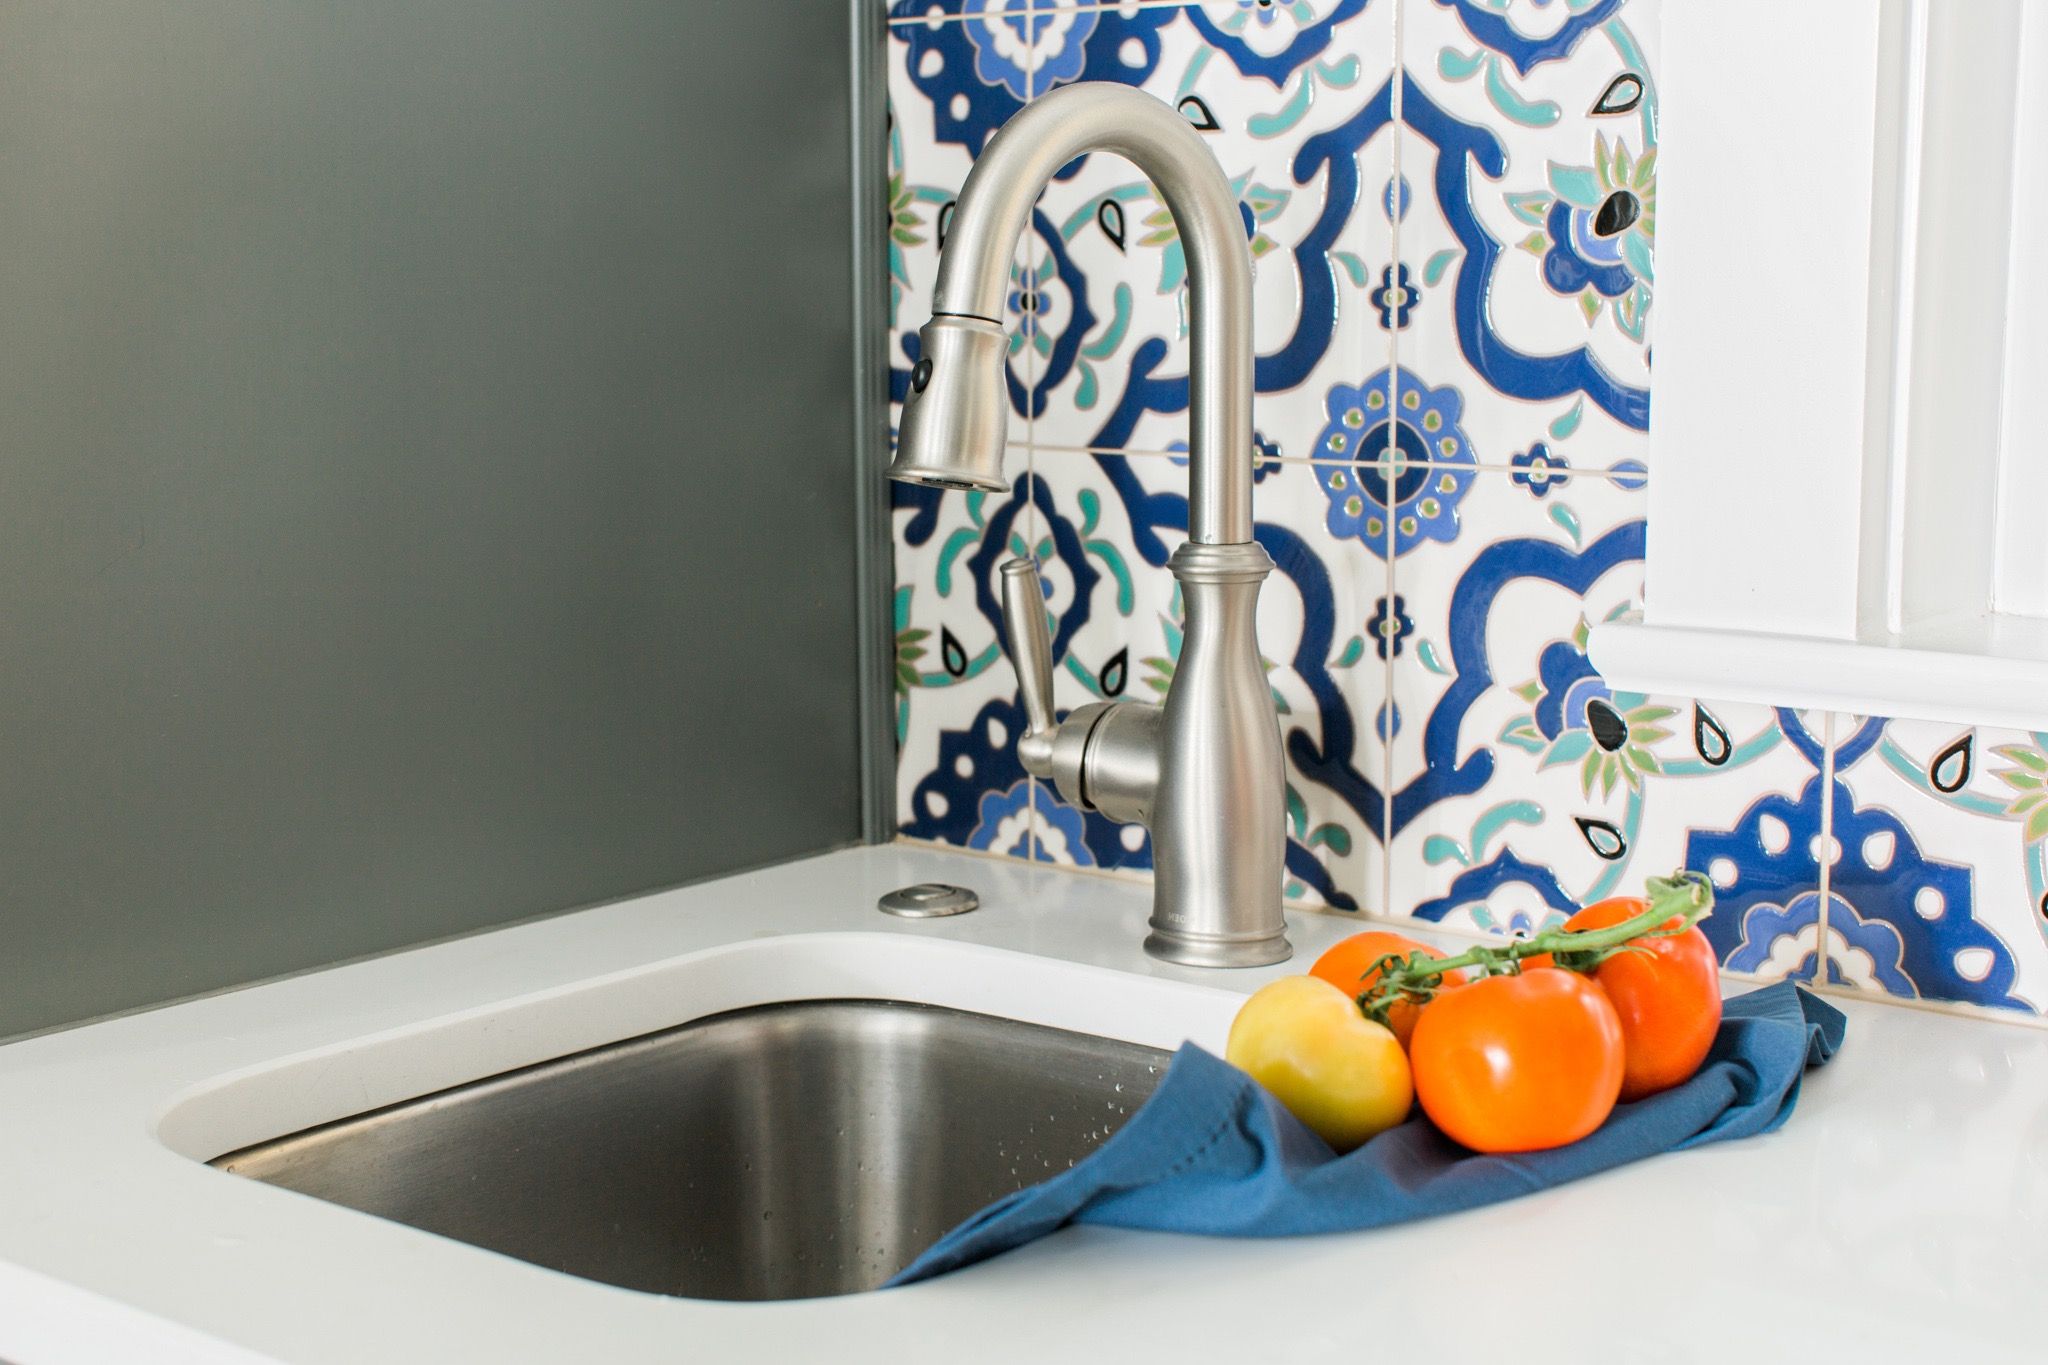 Kitchen Sink With Ceramic Backsplash (View 16 of 32)